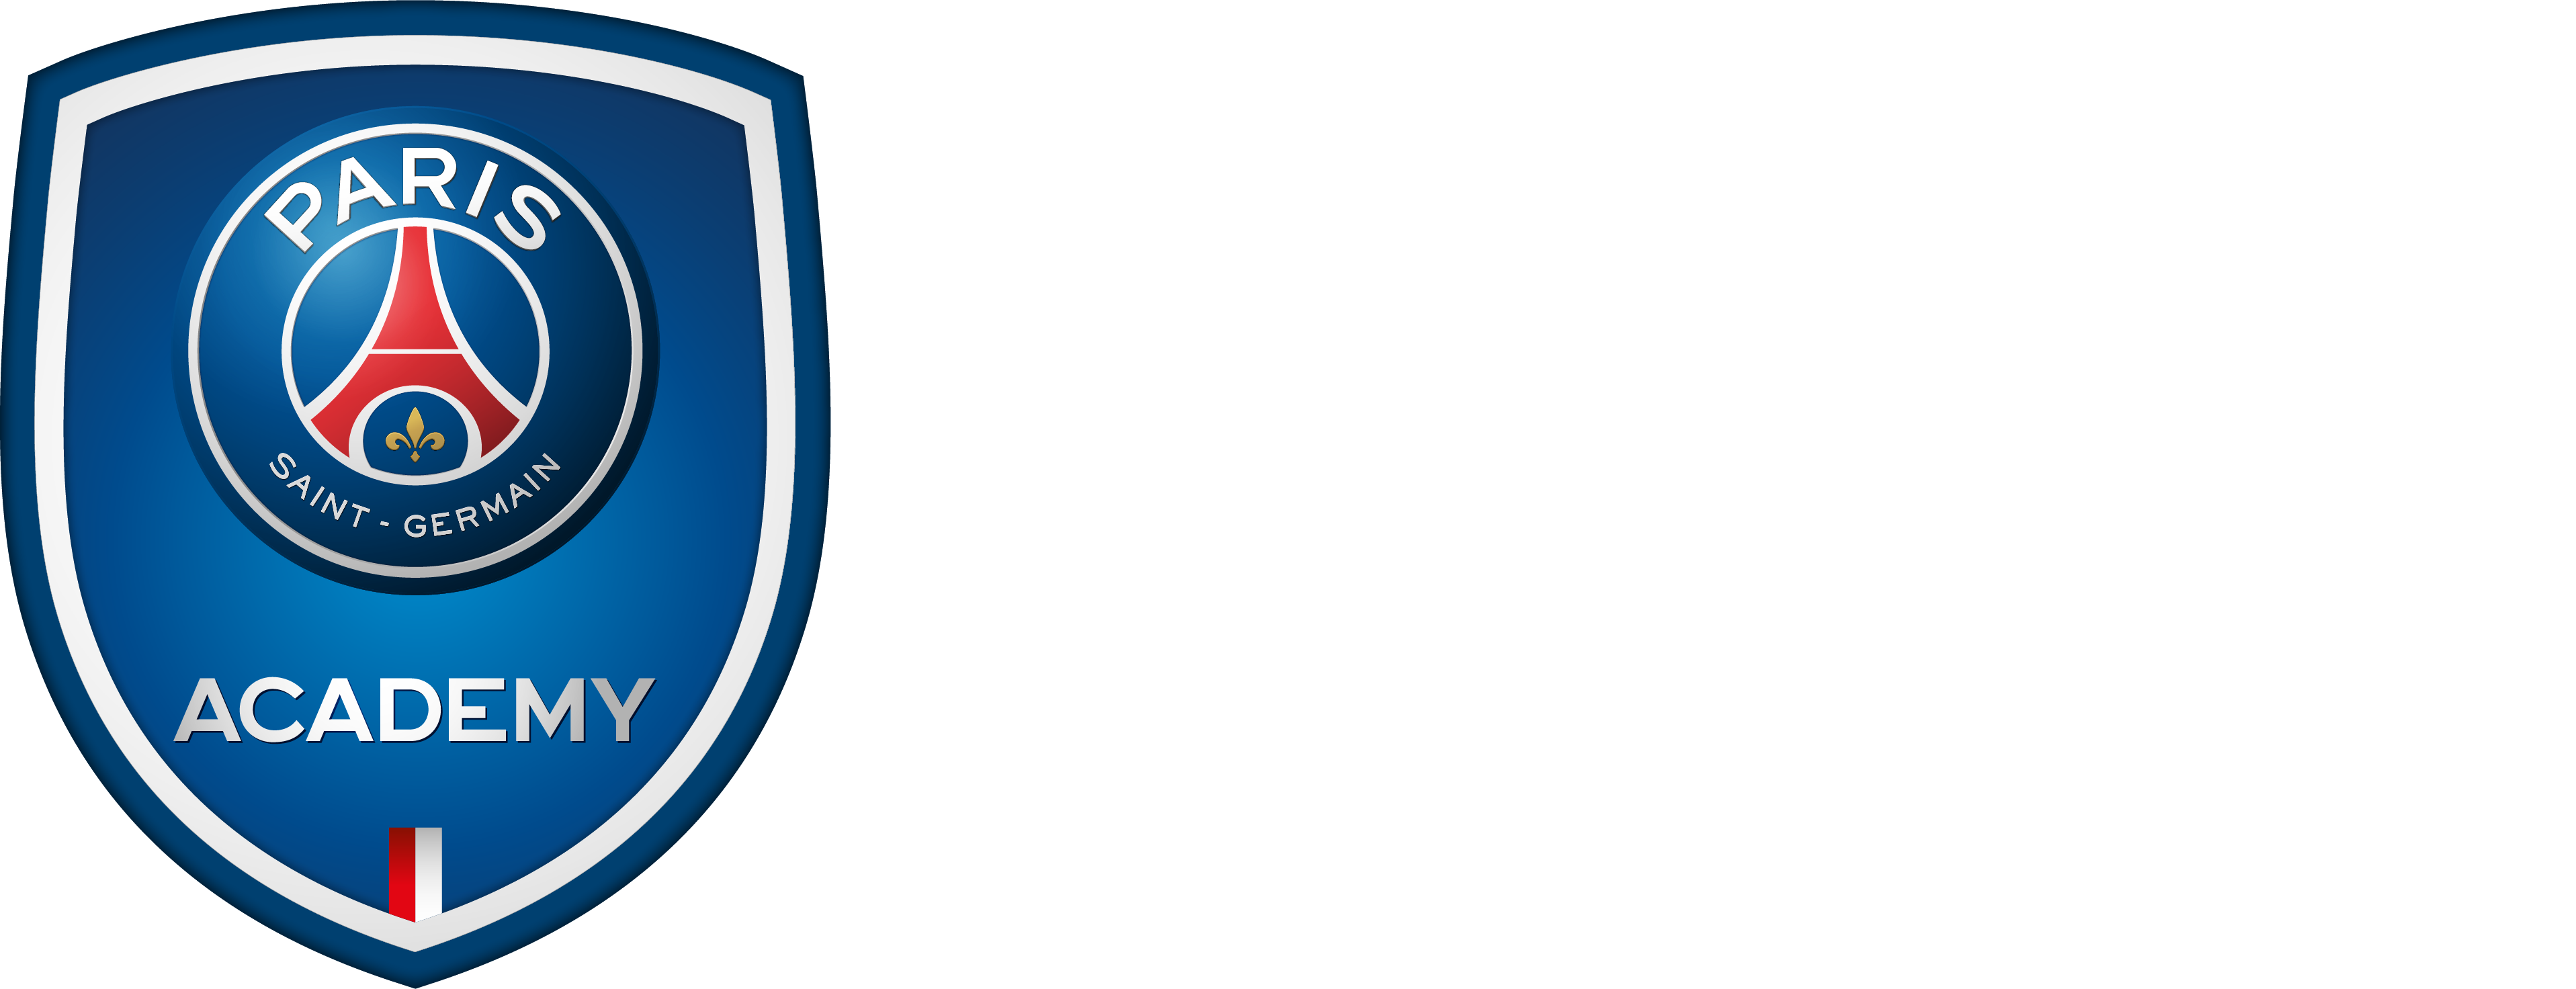 Psg Academy : Paris Saint Germain Open First Academy In ...